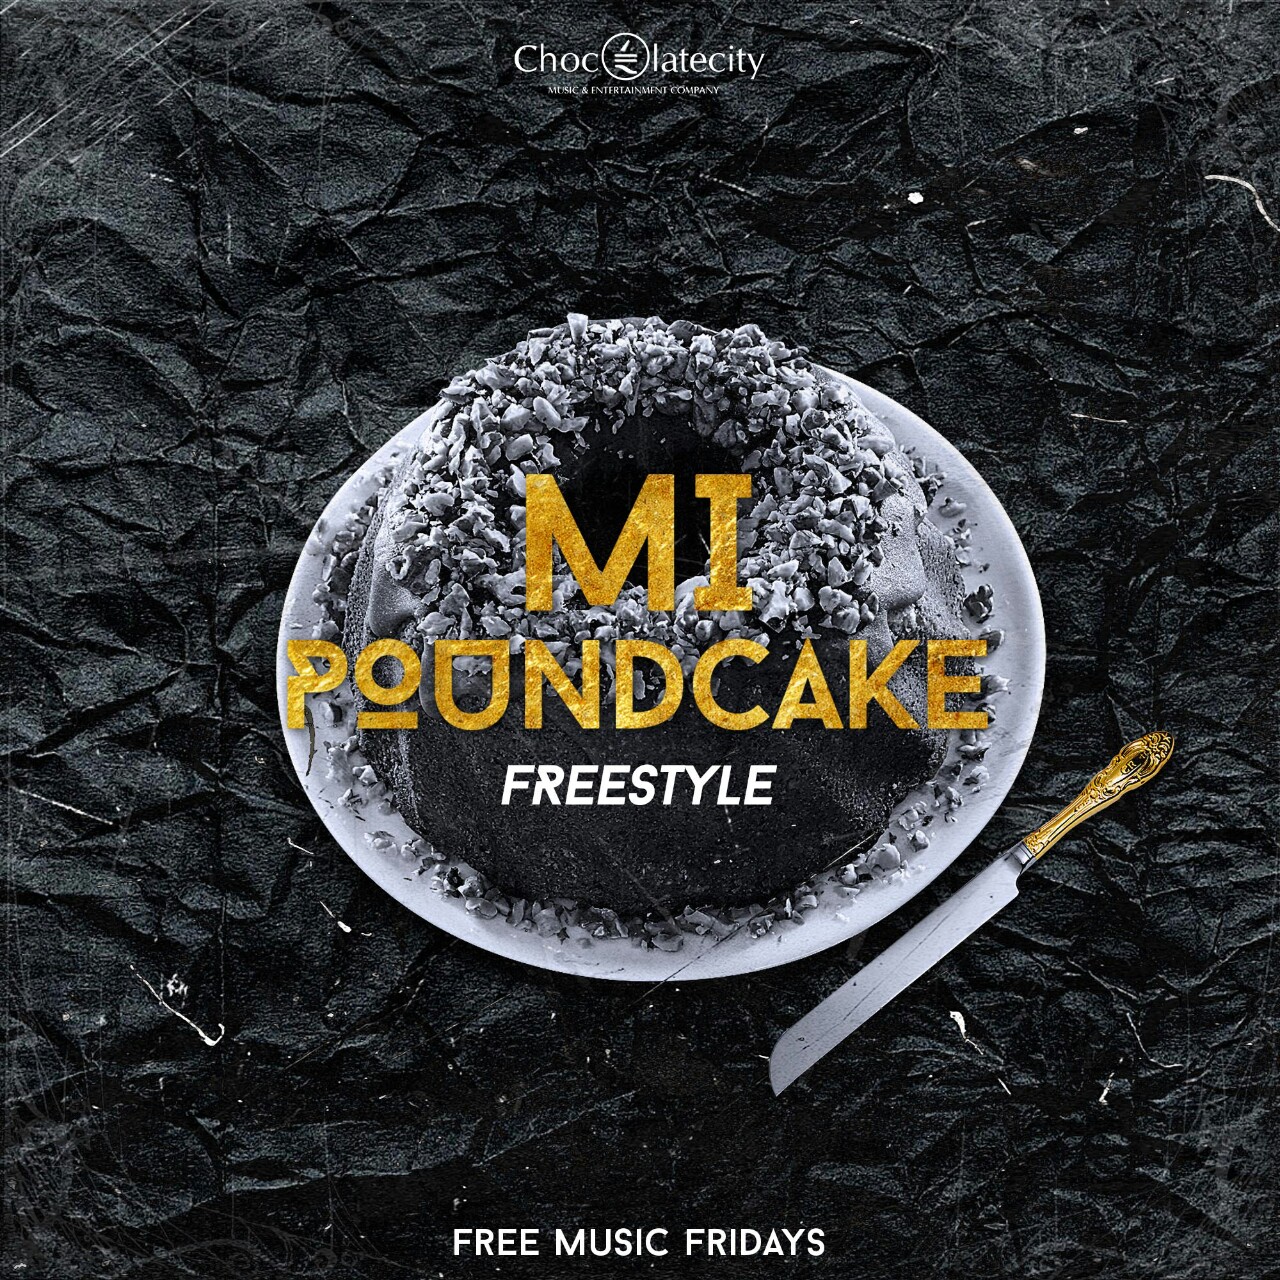 M.I - Round Cake